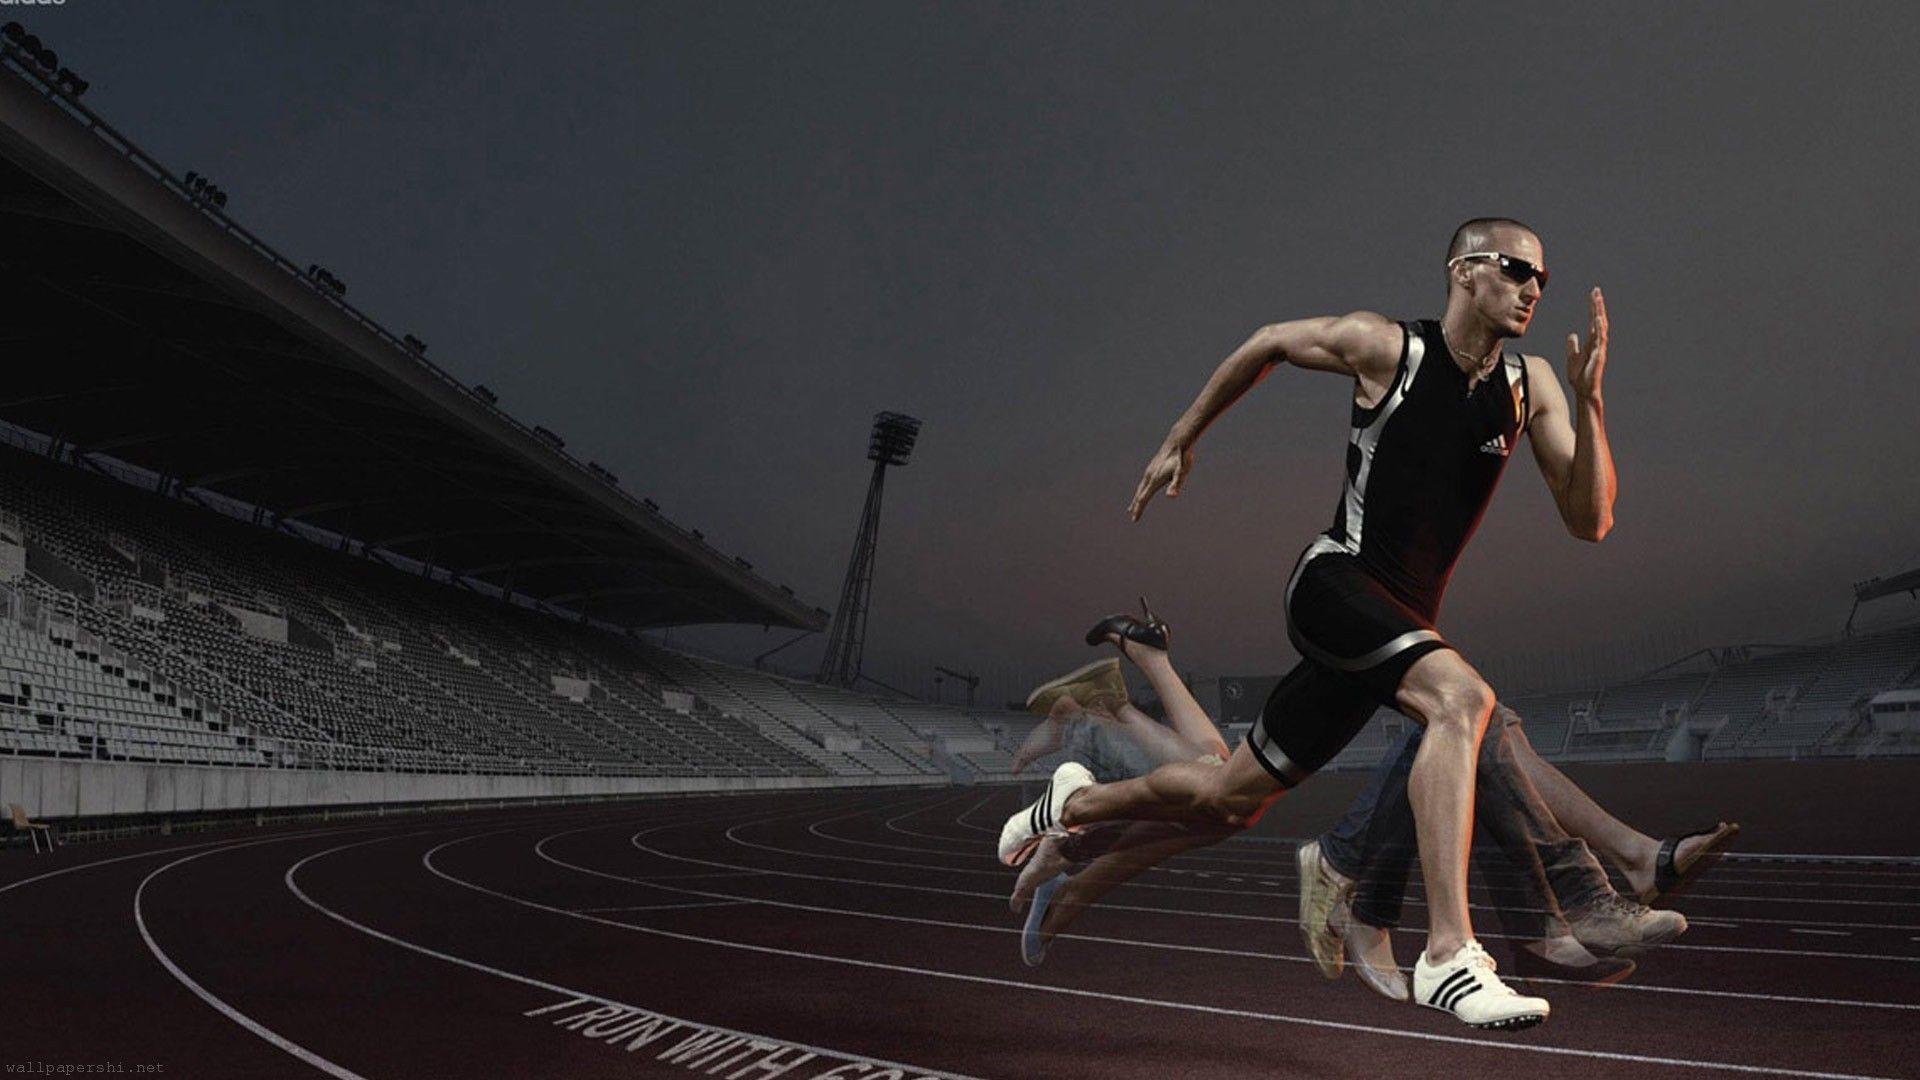 Olimpics atlethics sports HD Desktop Widescreen Background. High